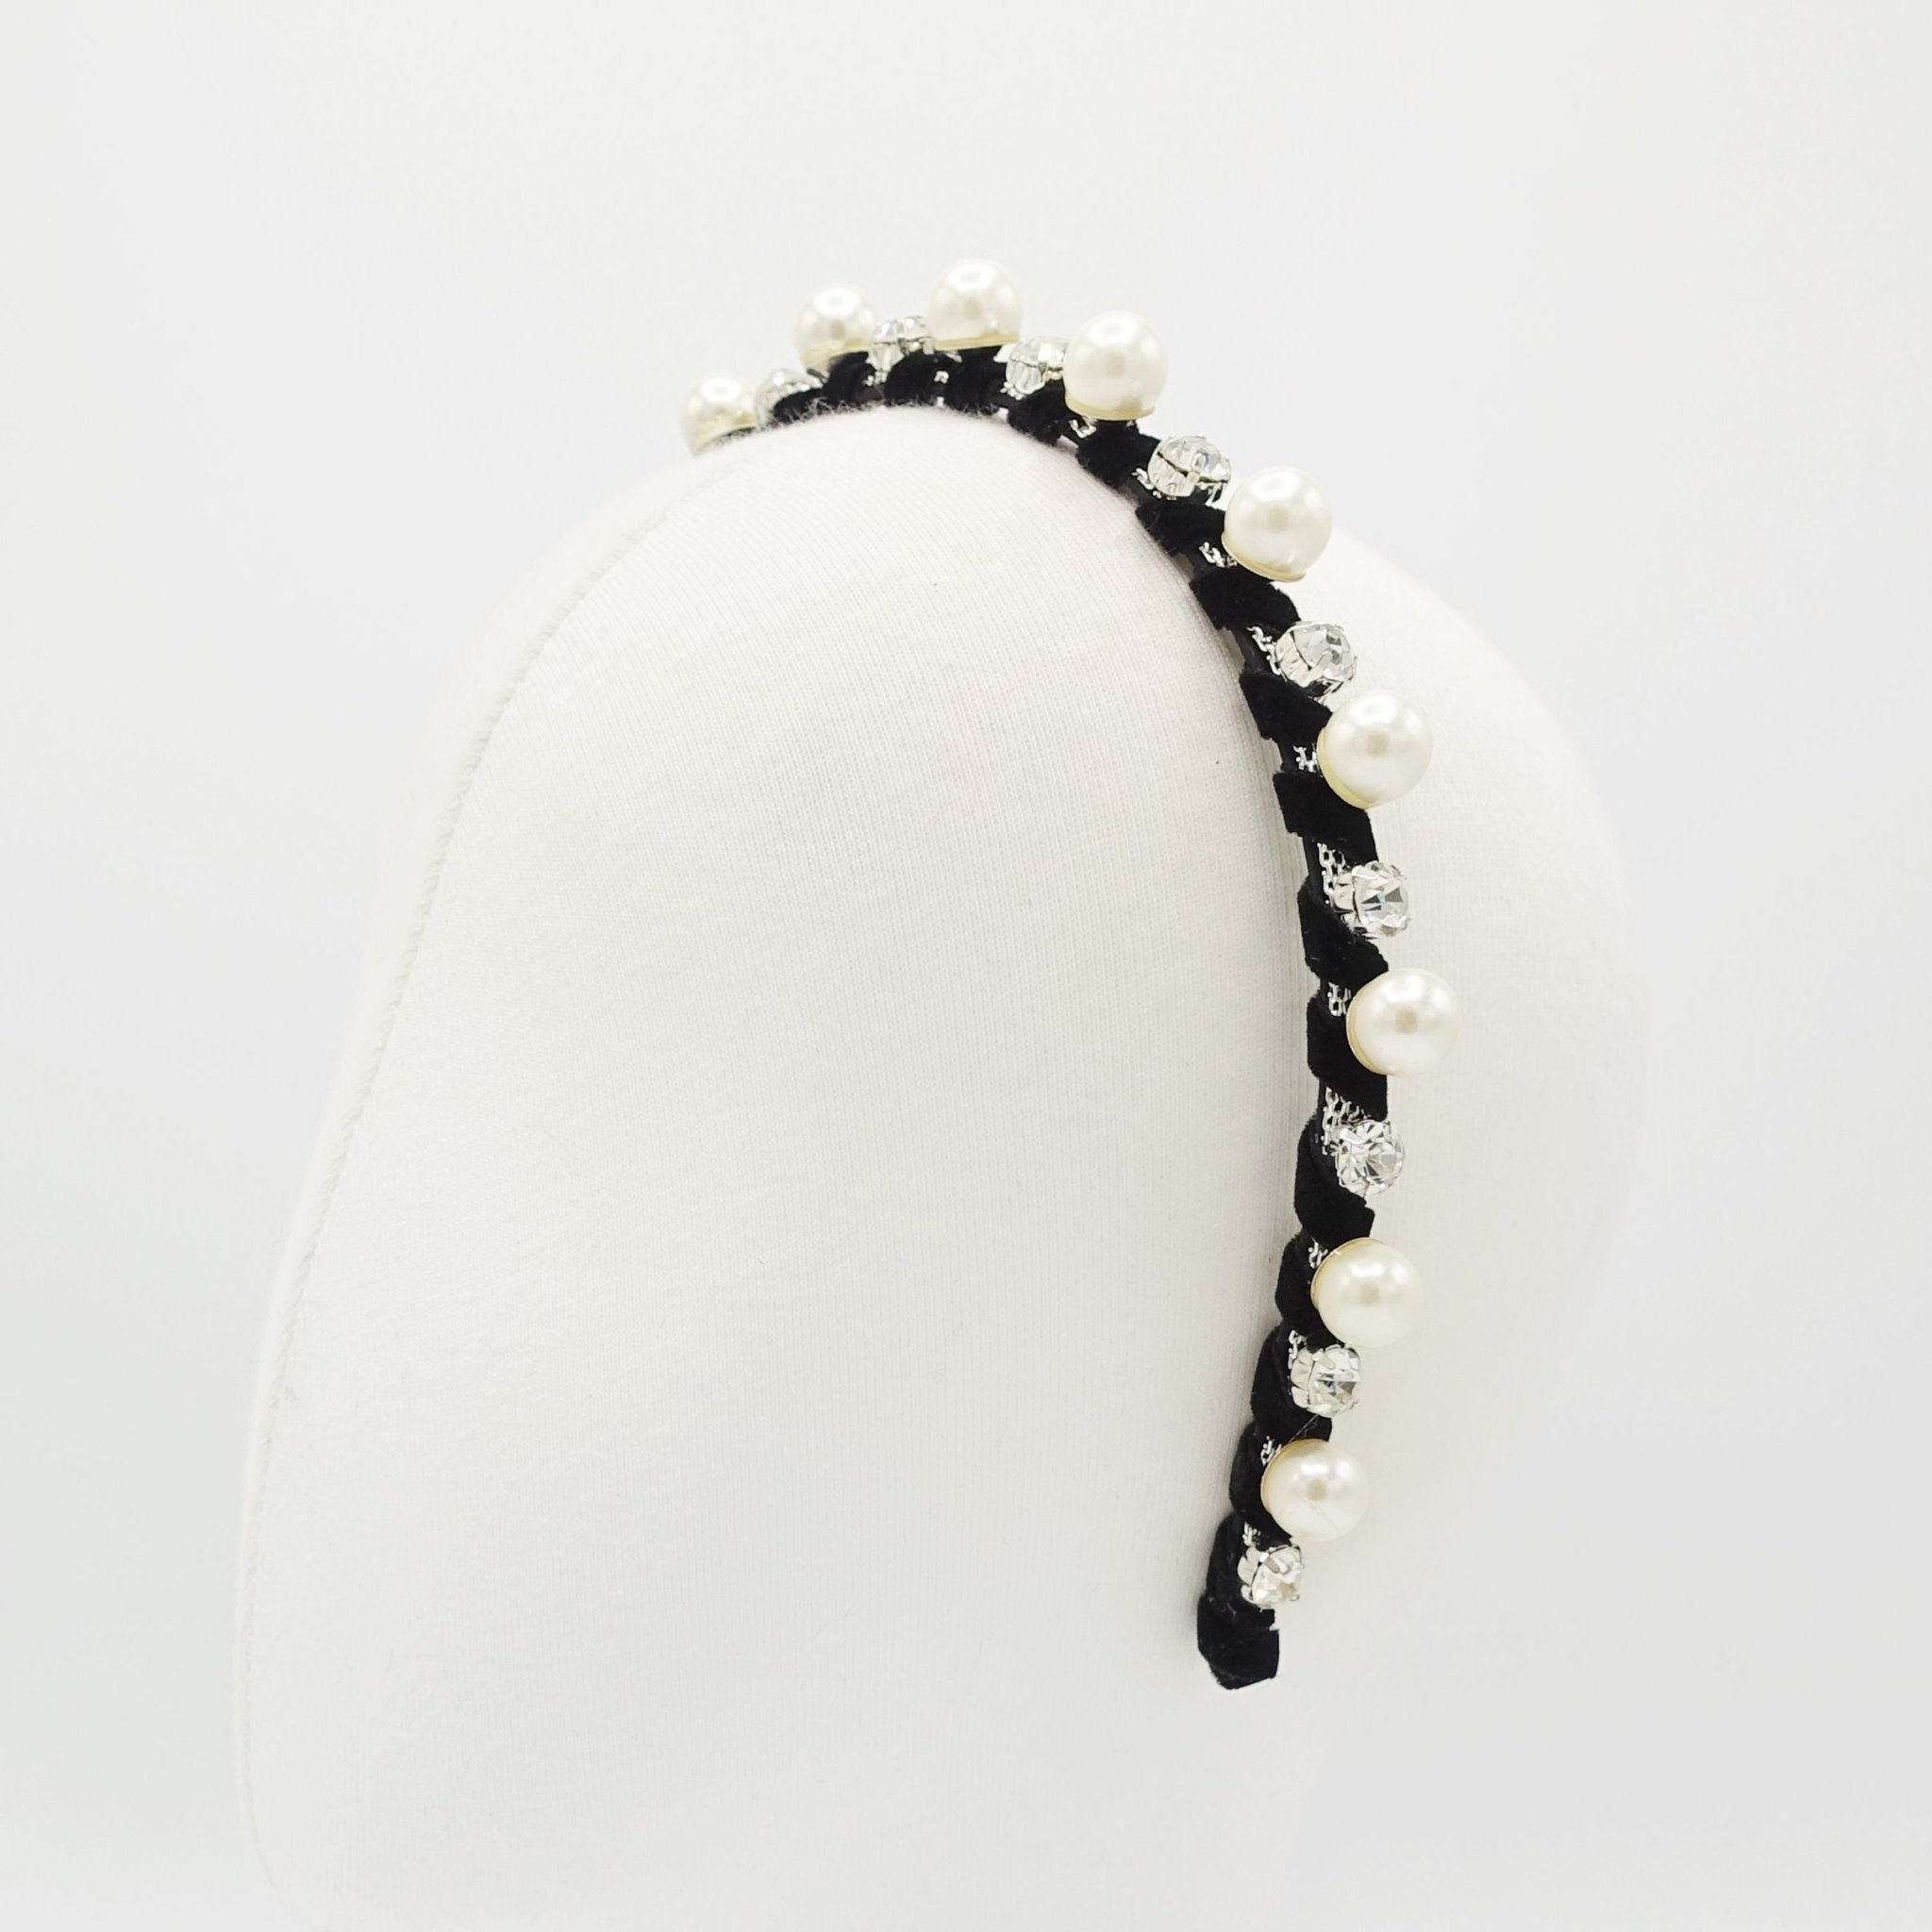 veryshine.com hairband/headband pearl rhinestone headband embellished velvet wrap hairband women hair accessory